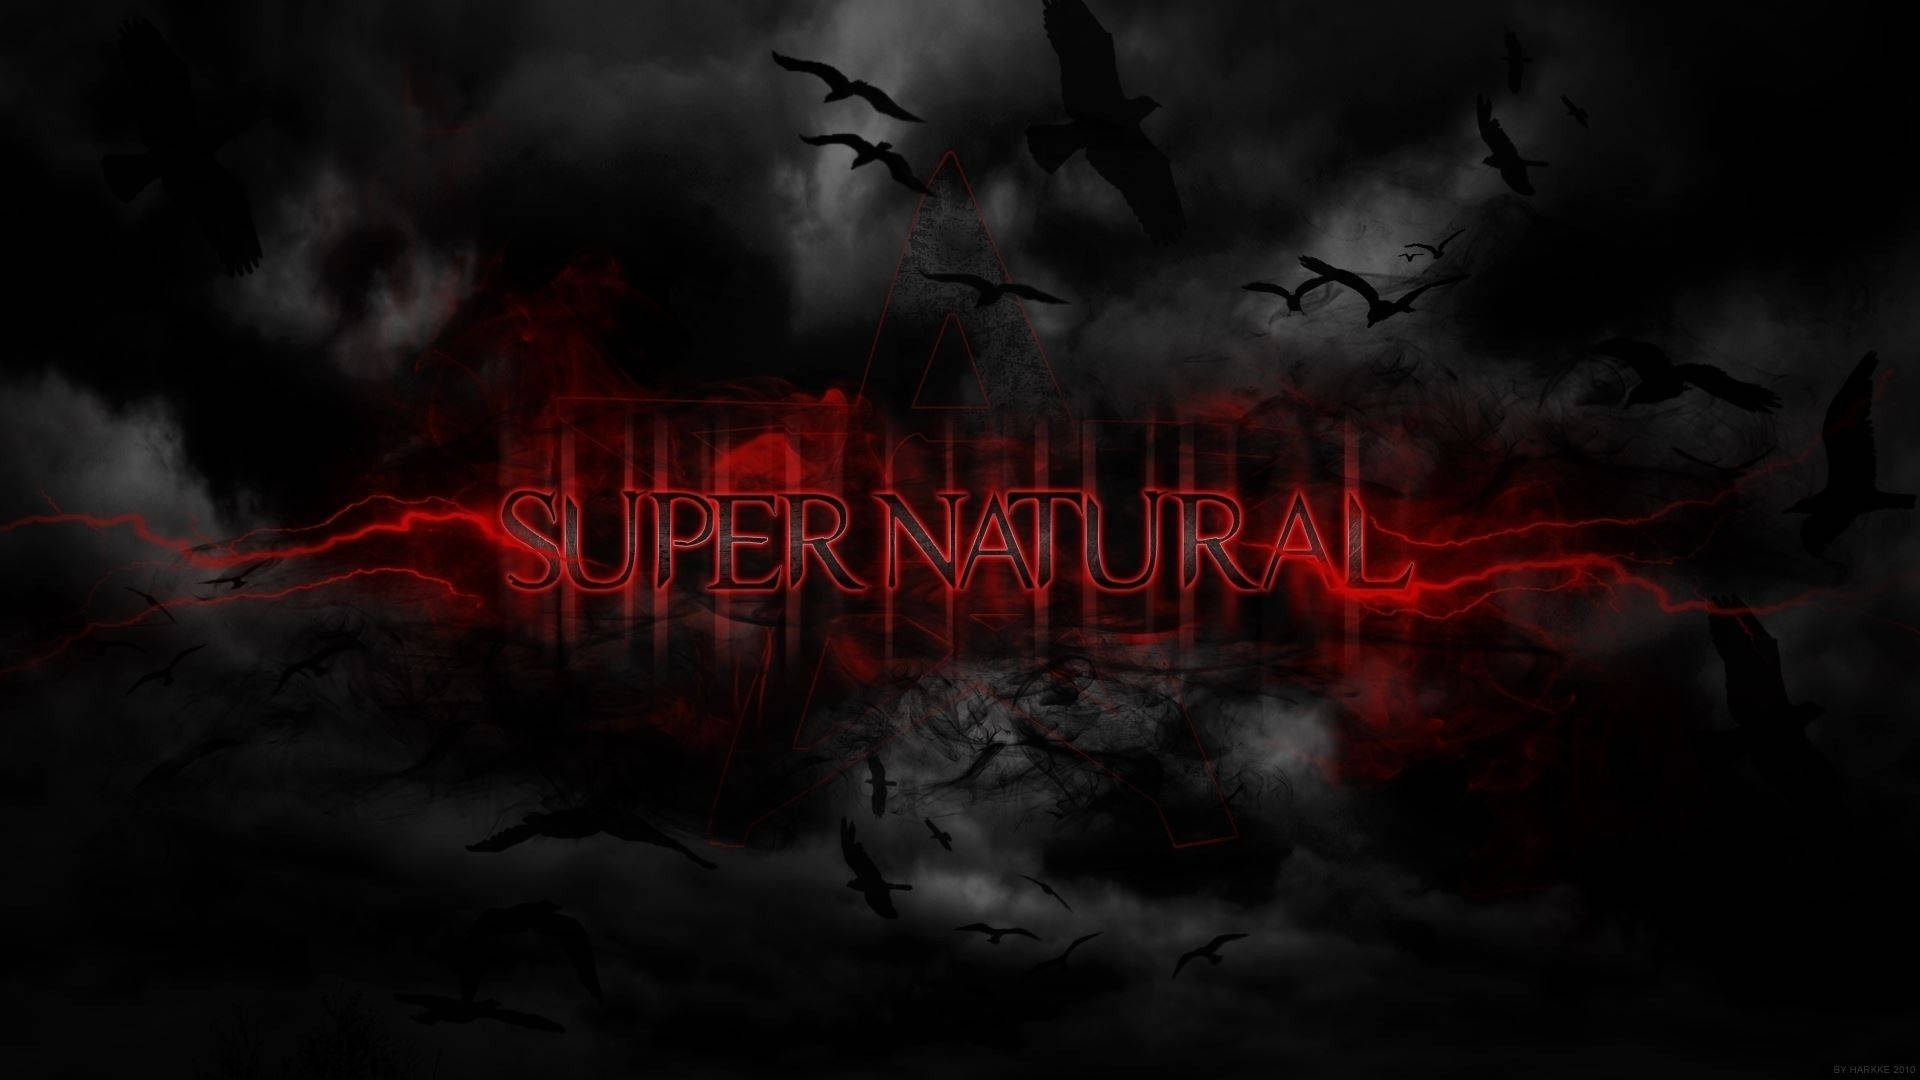 Supernatural Creatures Against a Night Sky Wallpaper